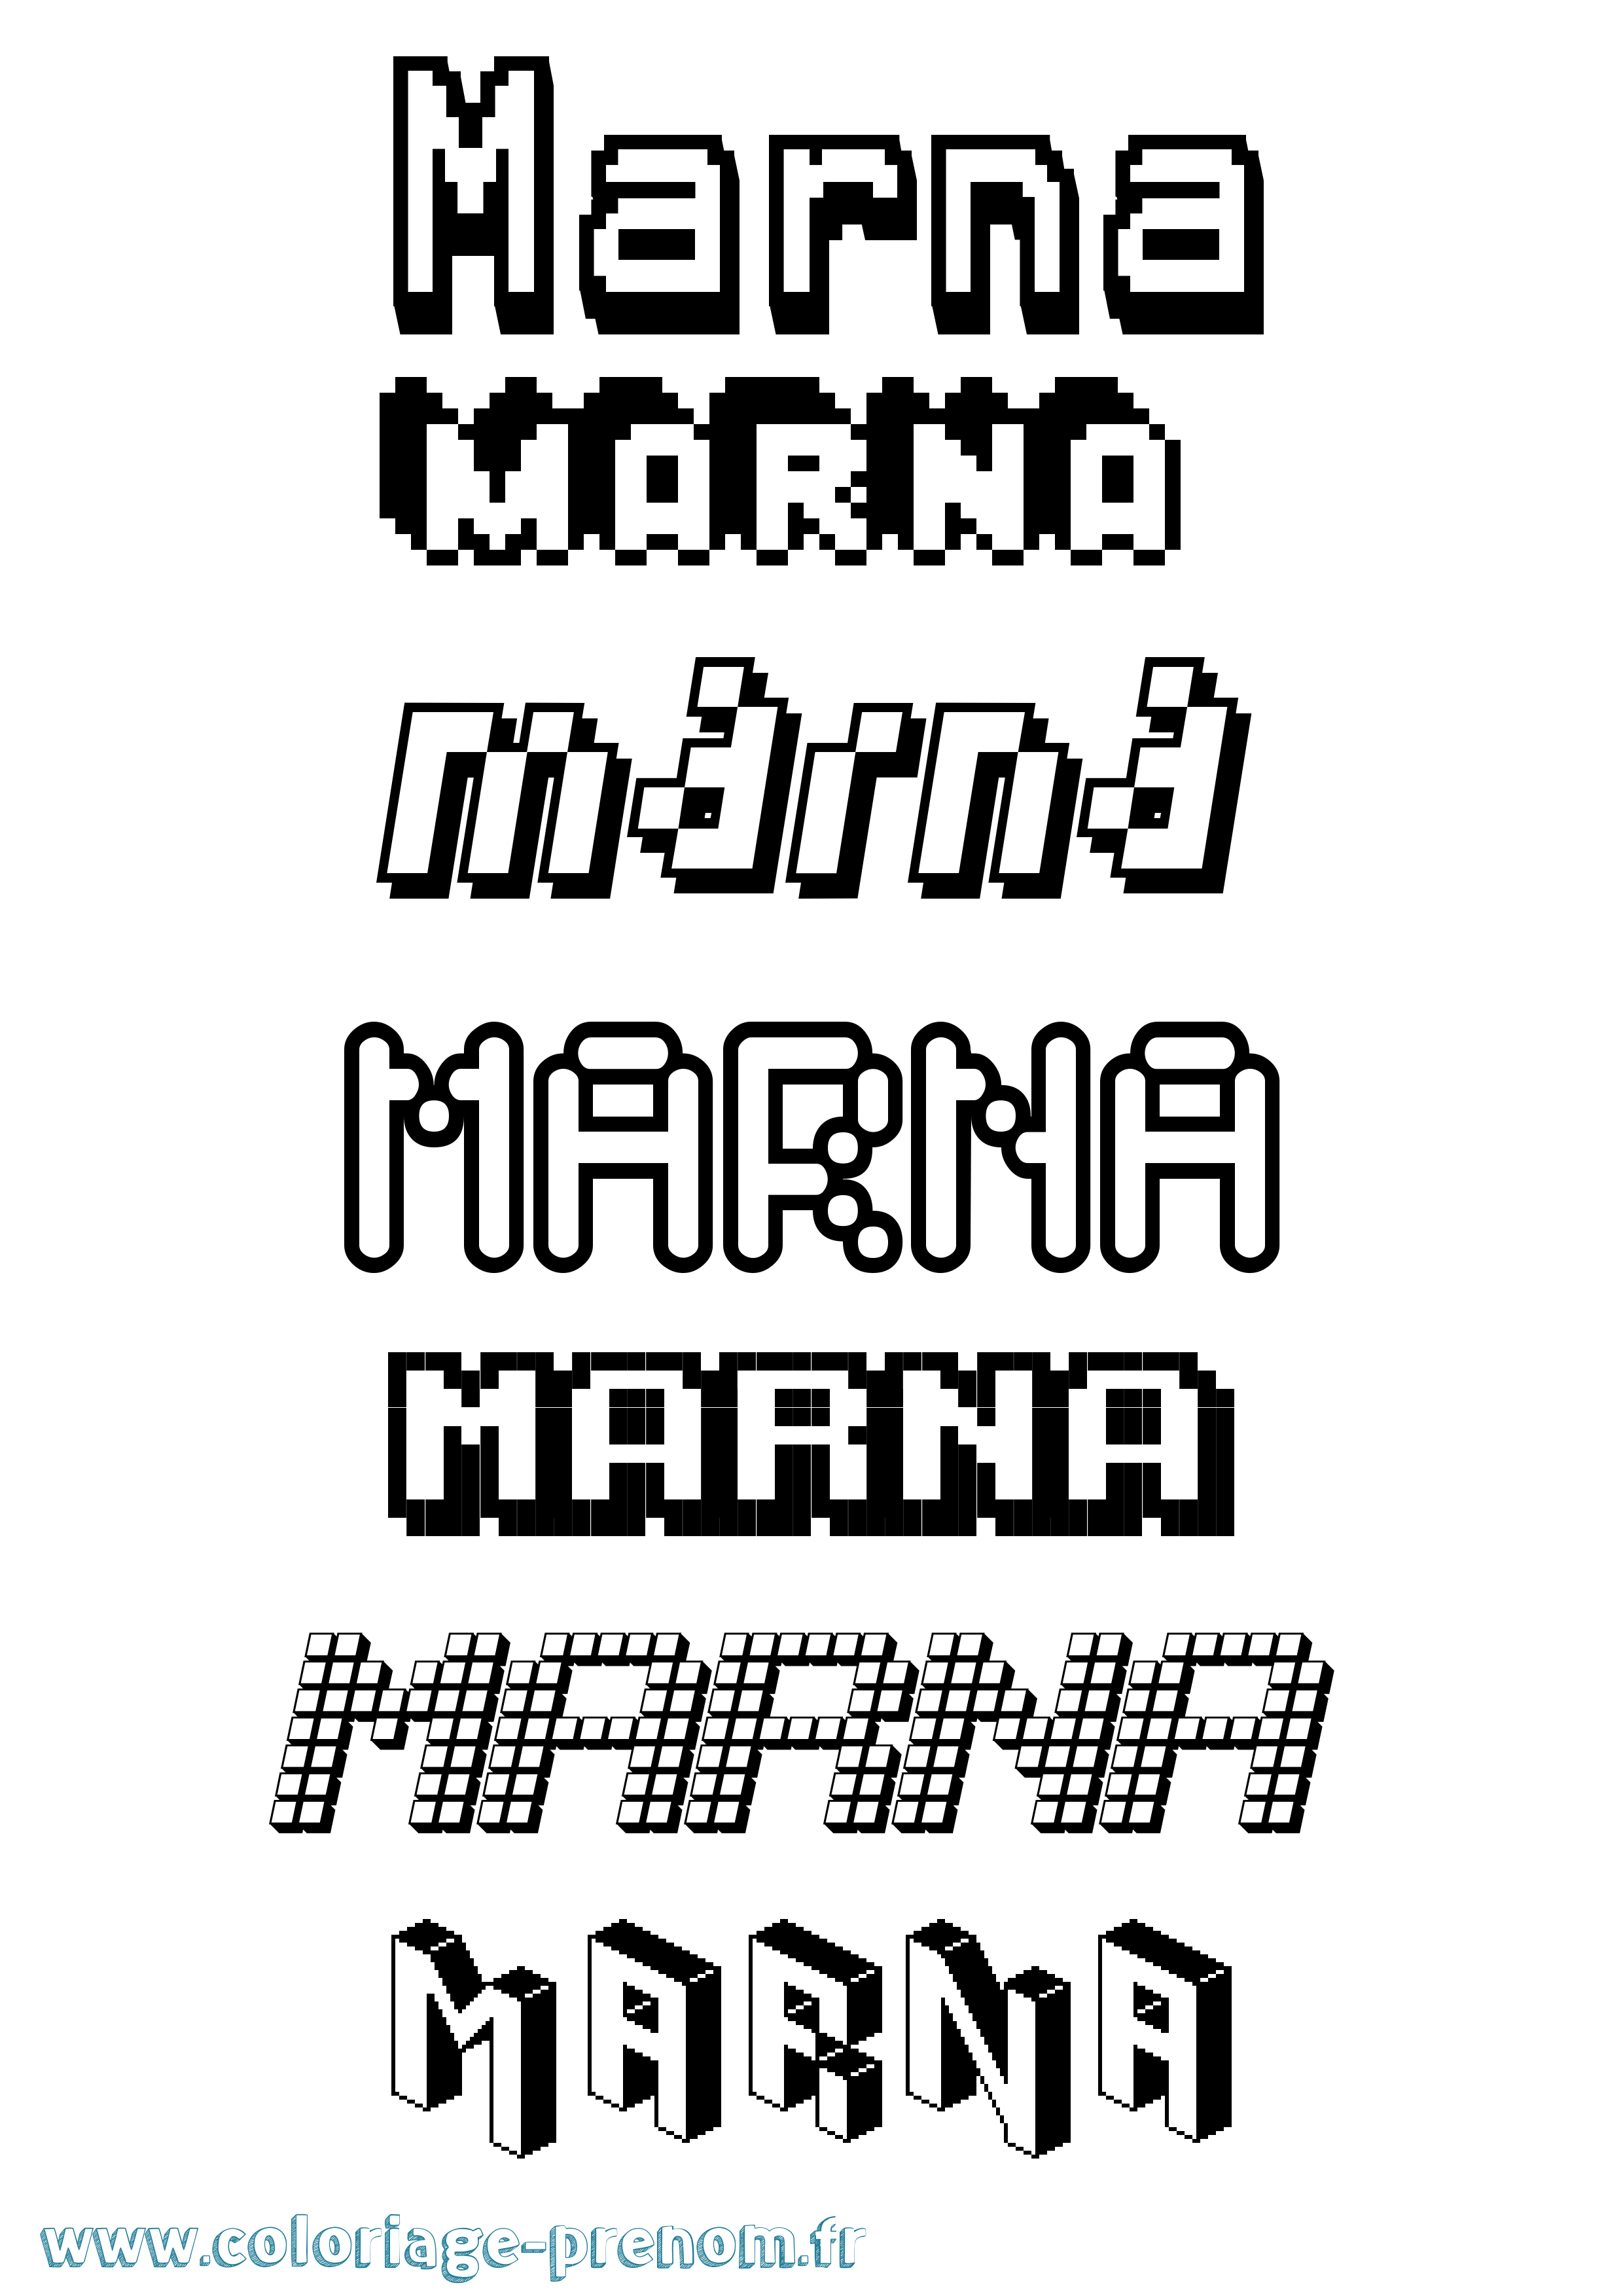 Coloriage prénom Marna Pixel